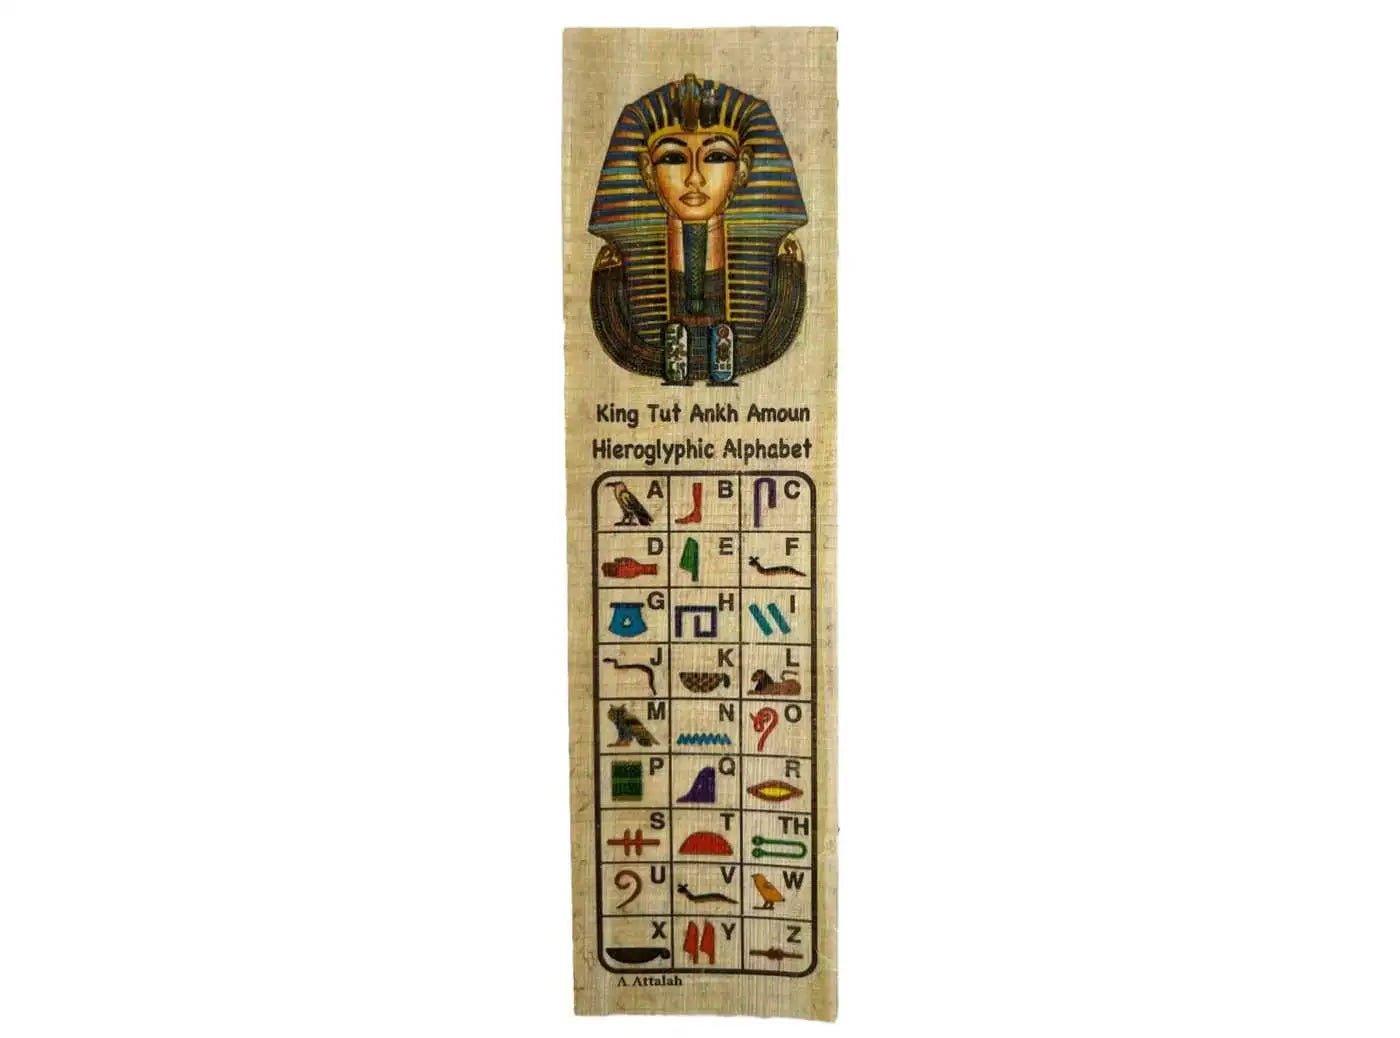 Hieroglyphs Paper - King Tut Ankh Amoun - Hieroglyphic Alphabet - Papyrus Bookmark History Educational